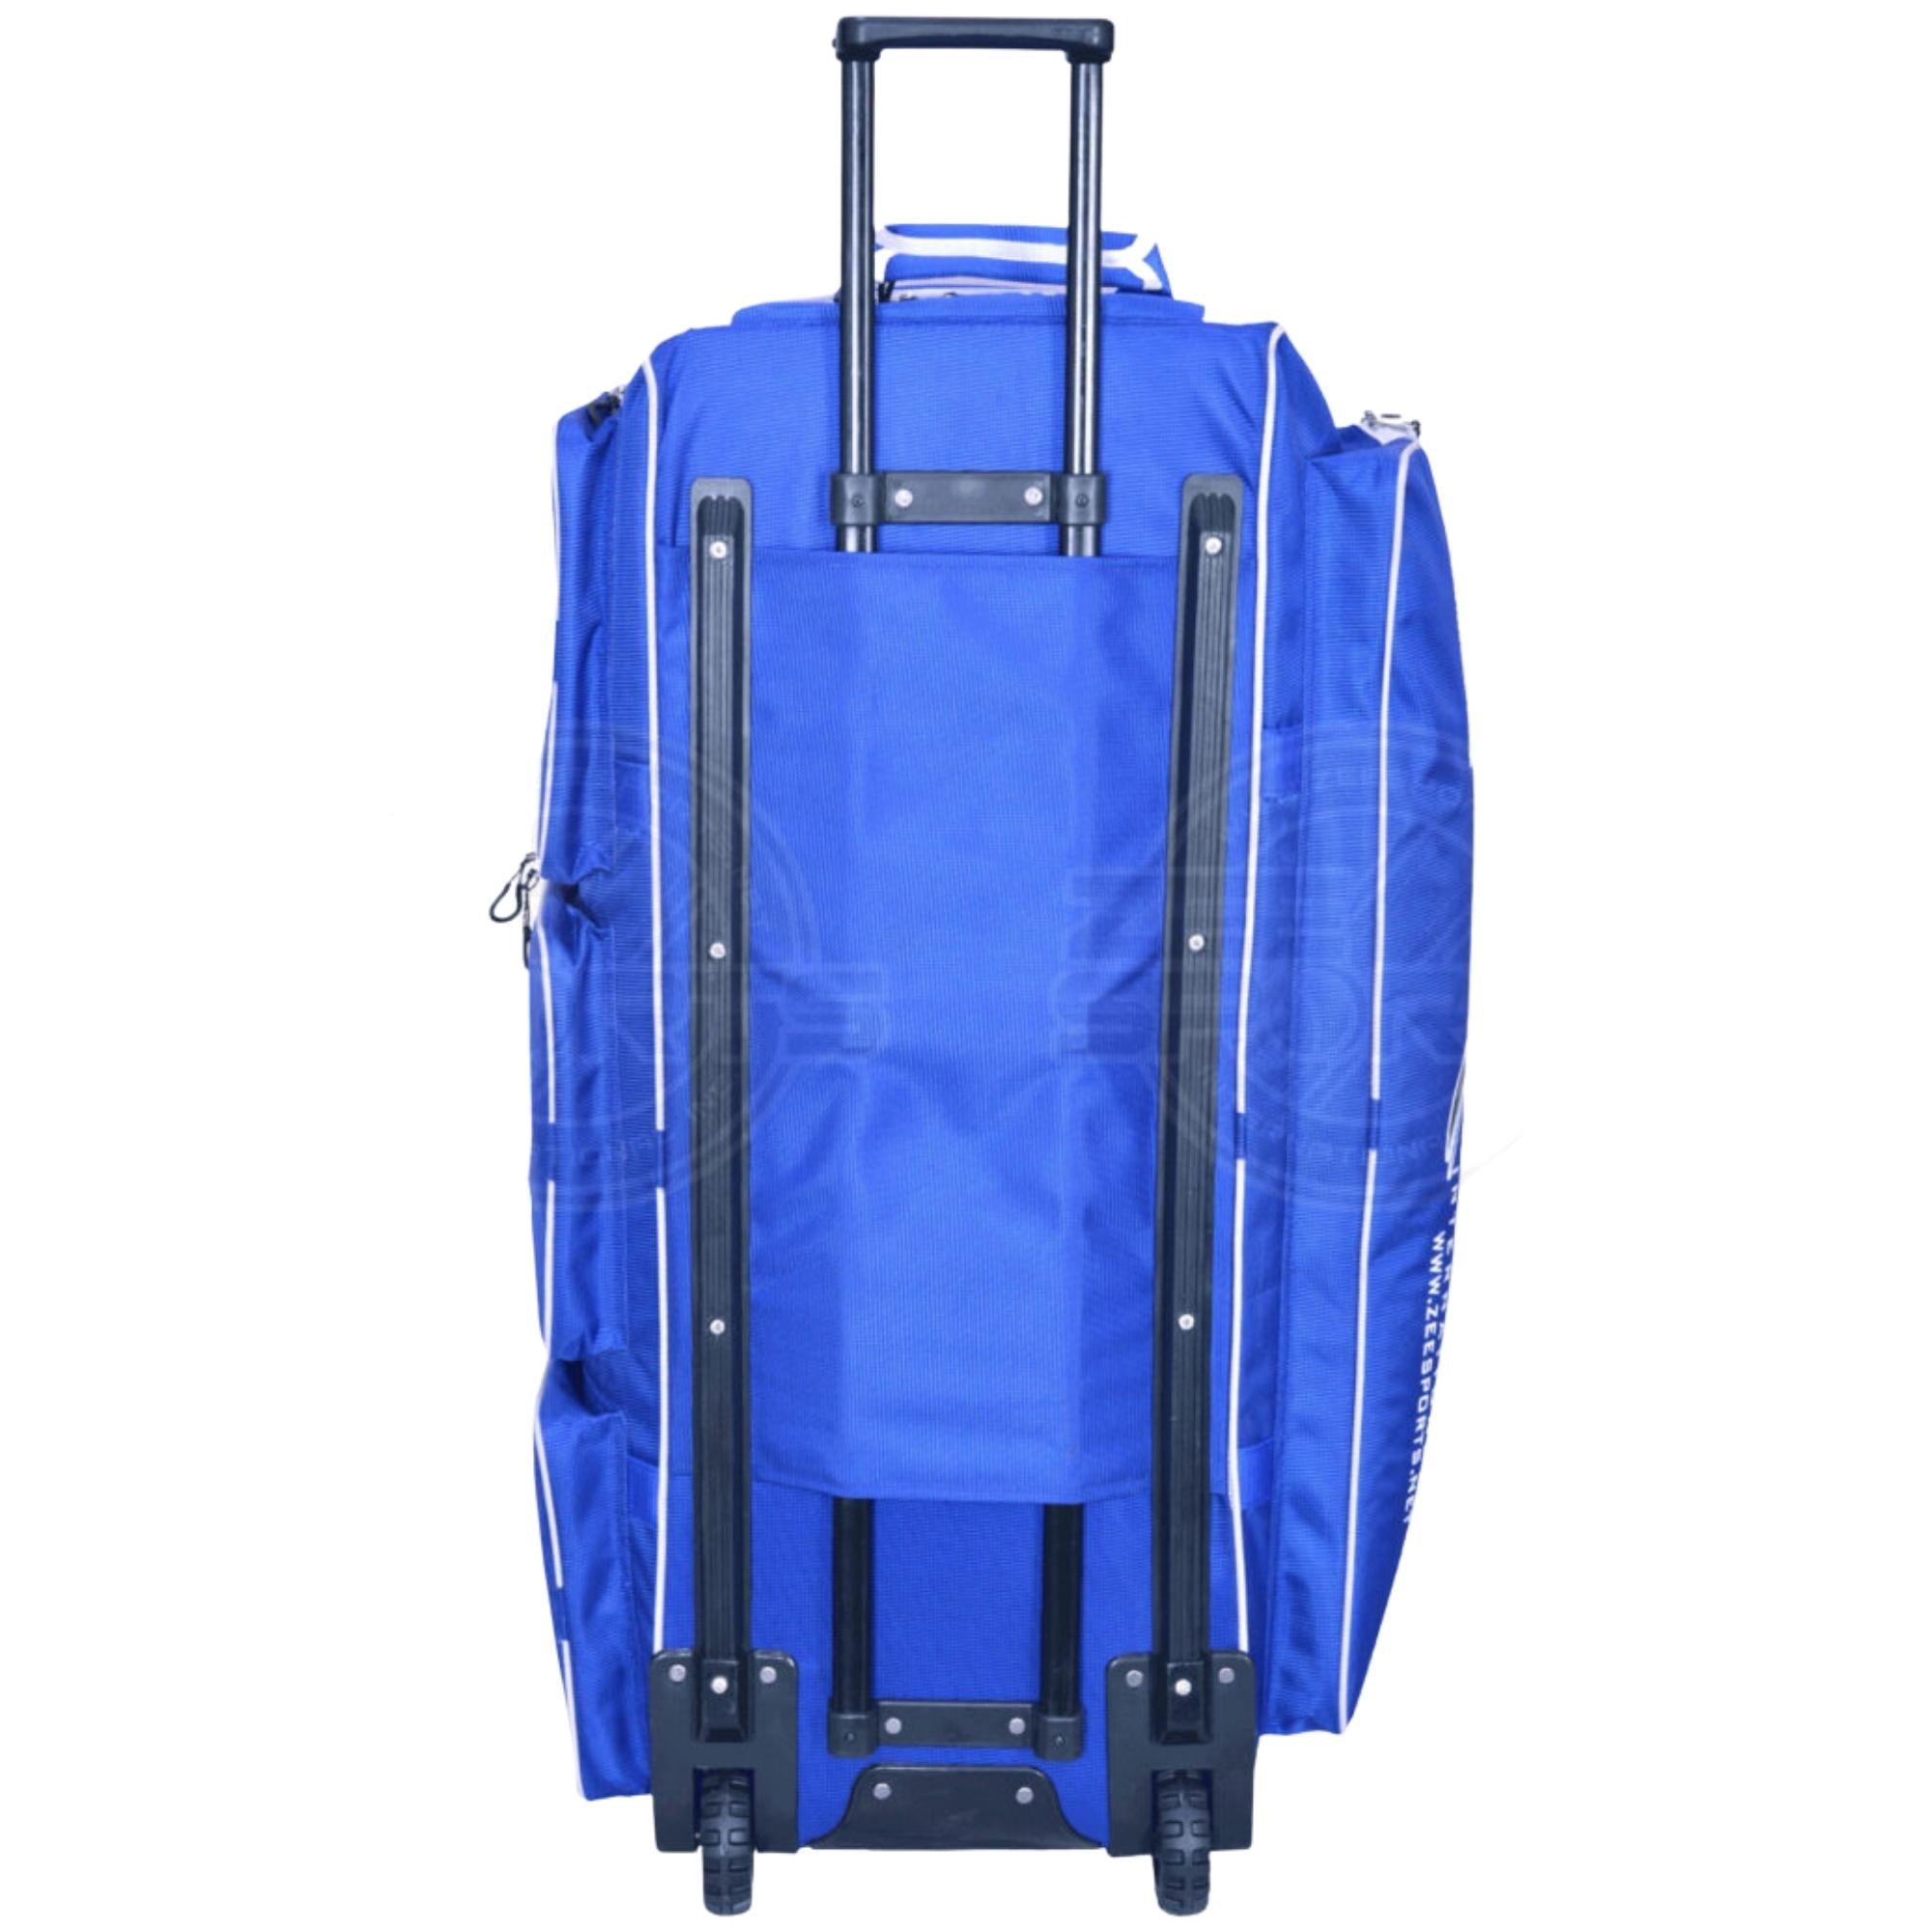 Zee Sports Kit Bag Limited Edition JR Wheelie WITH BAT CAVE